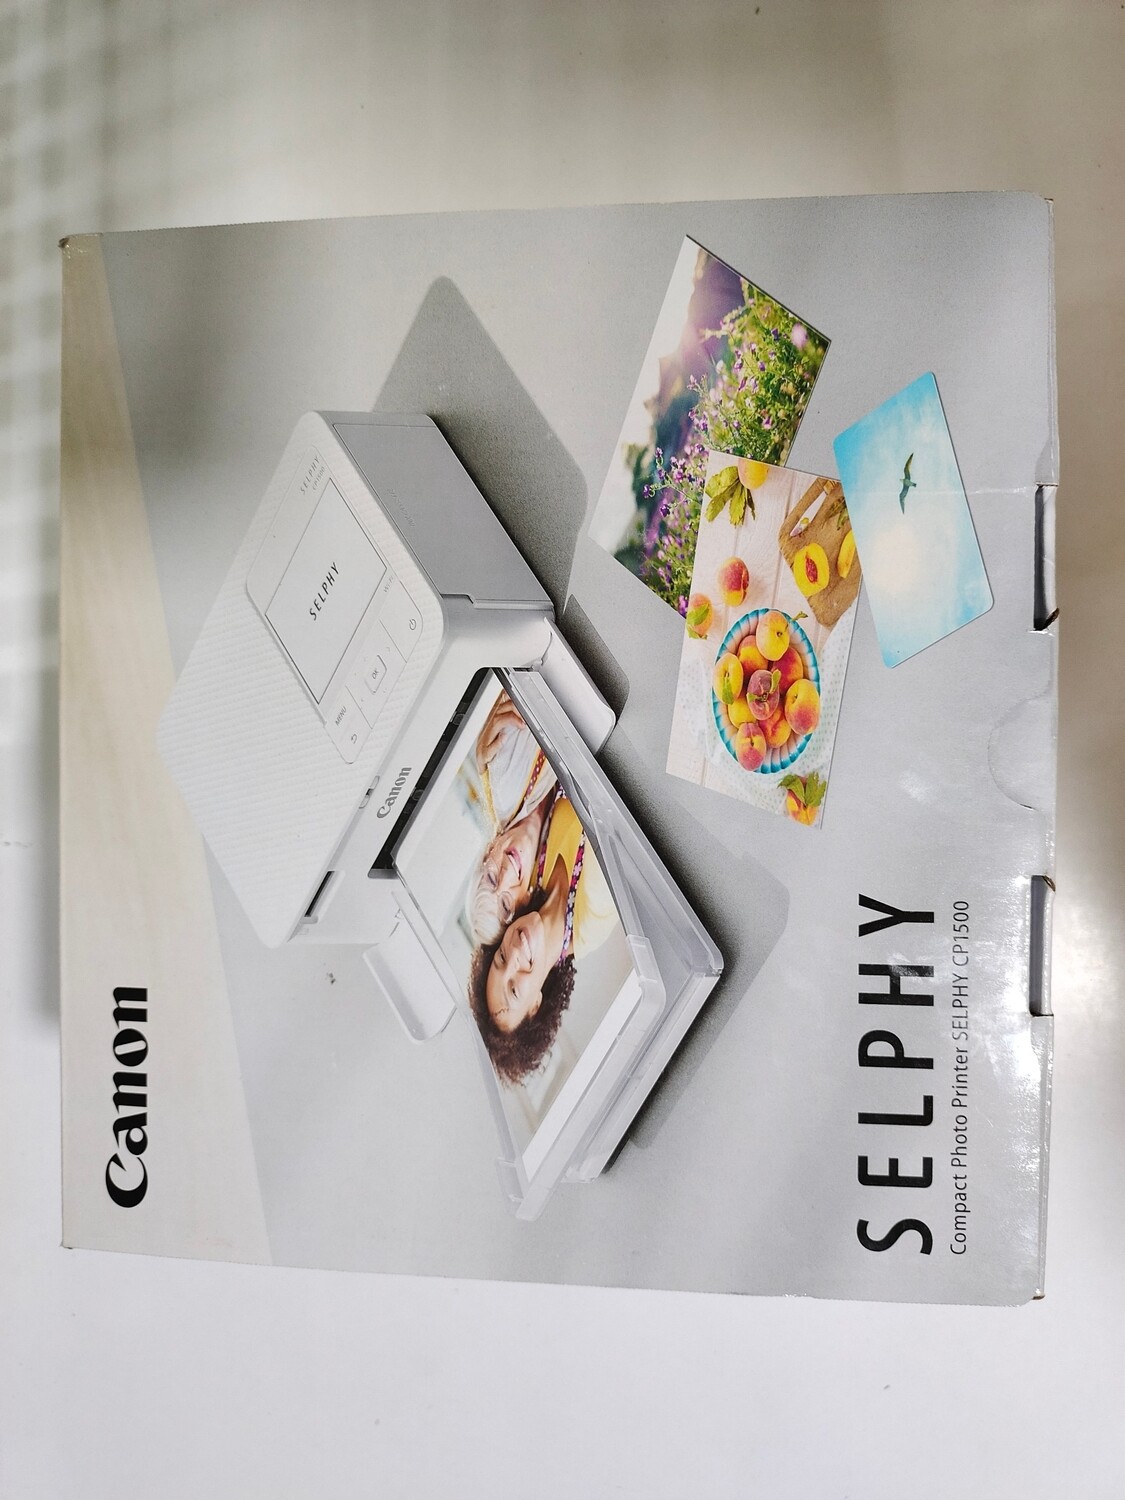 Canon SELPHY CP1500 Wireless Compact Photo Printer